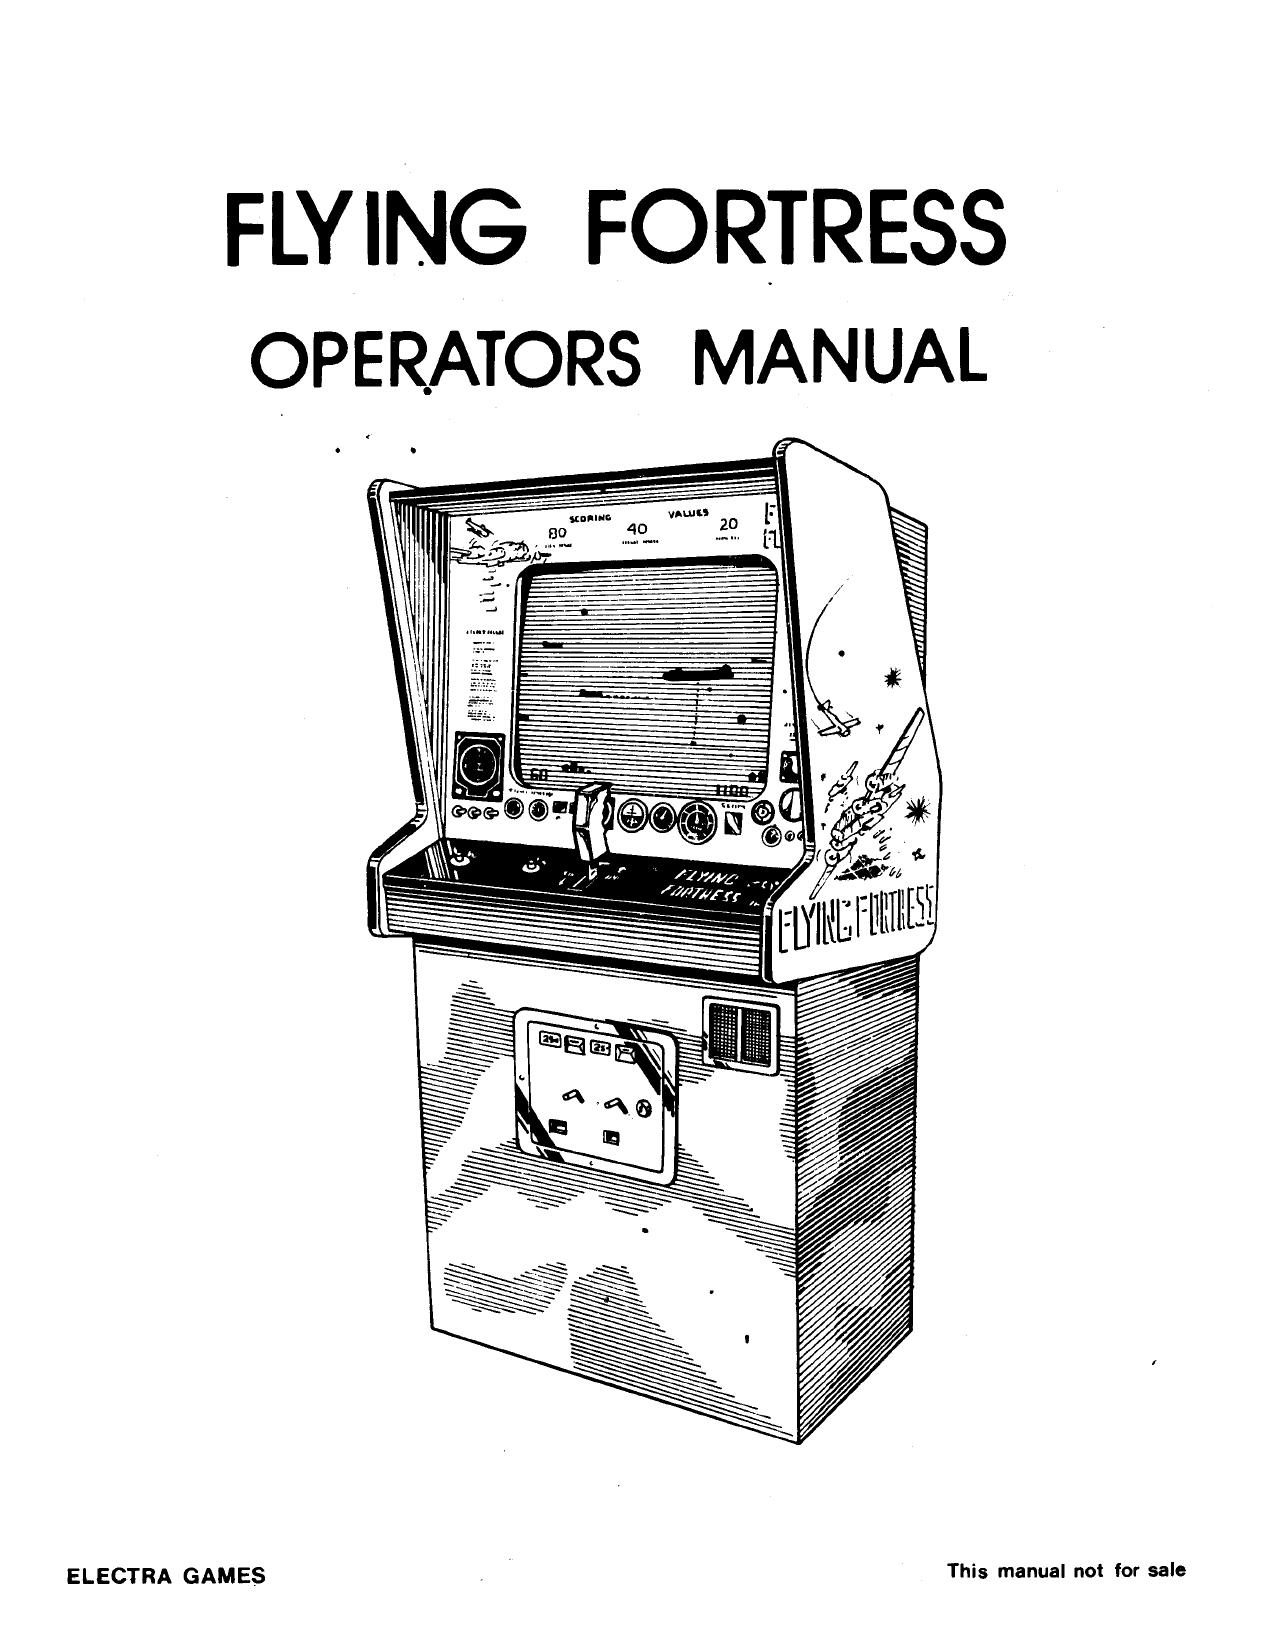 FlyingFortress Manual